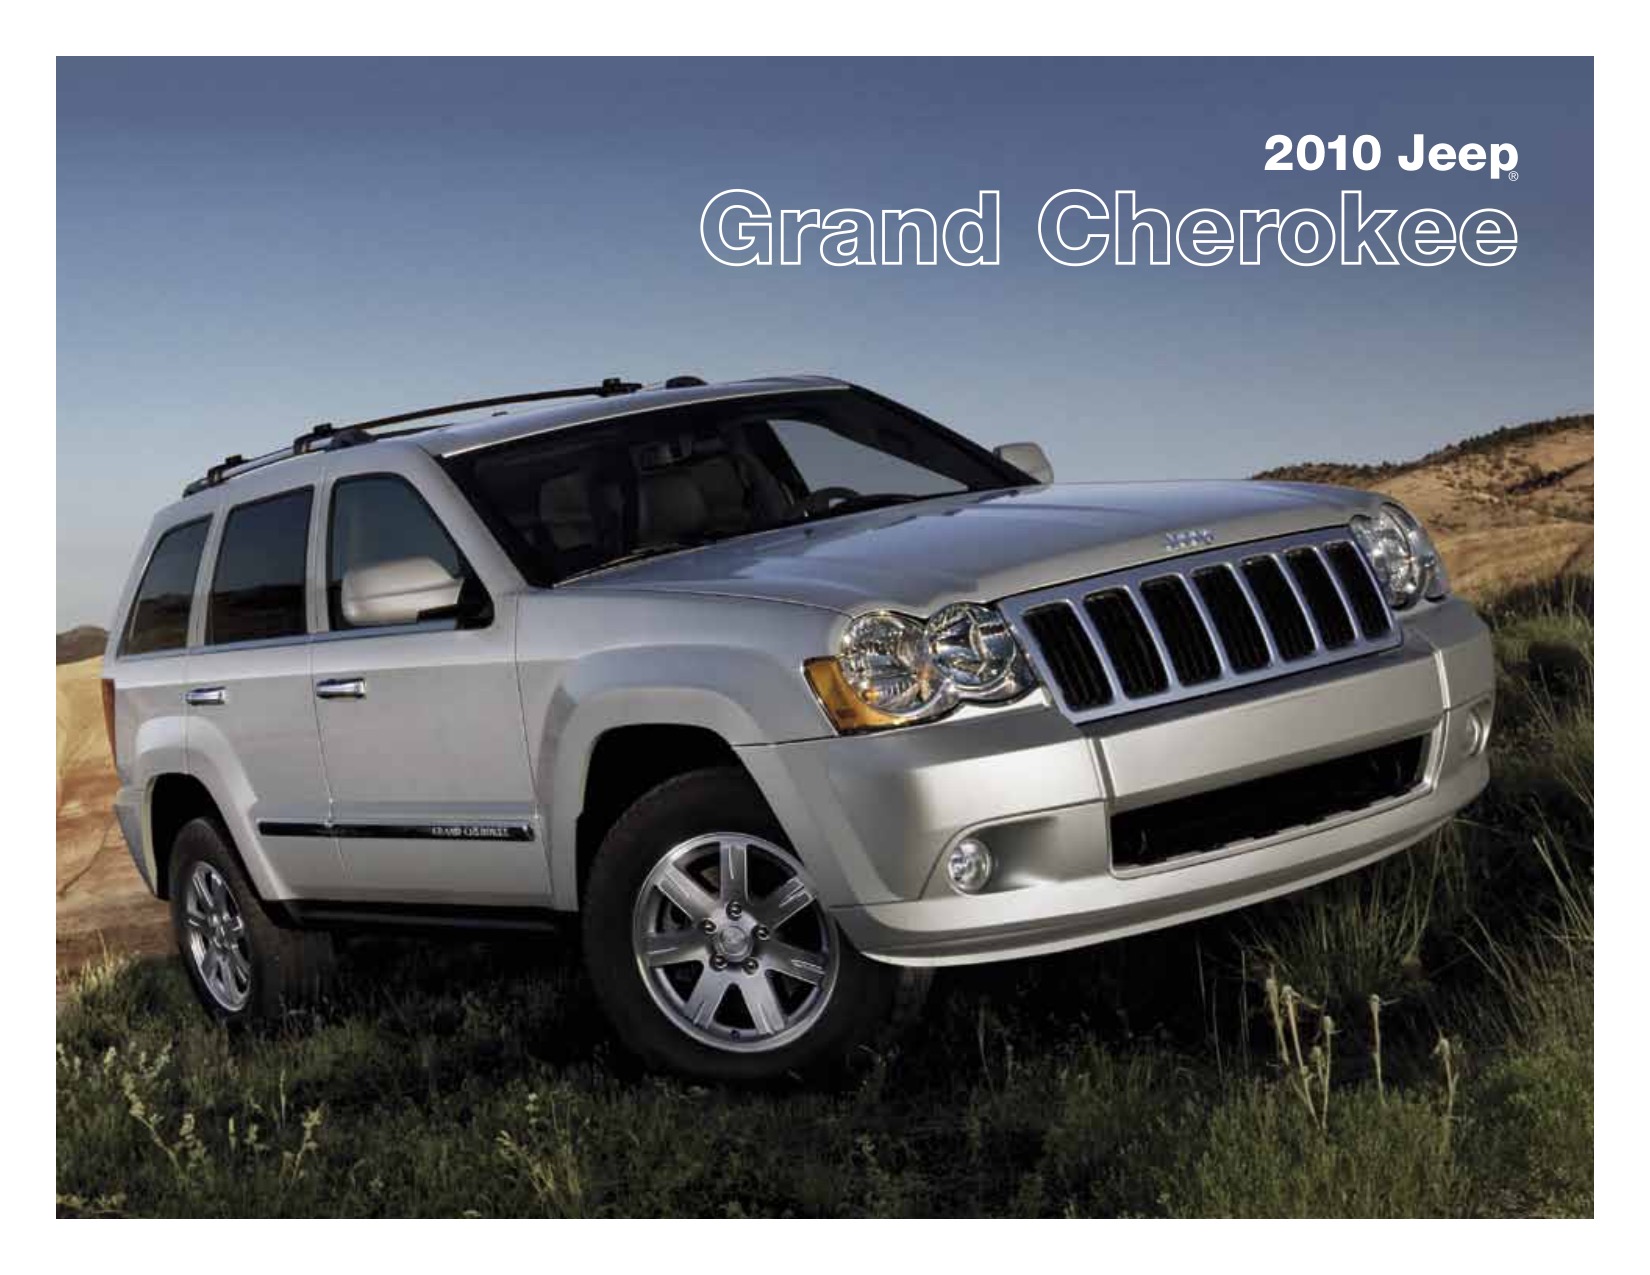 2010 Jeep Grand Cherokee Brochure